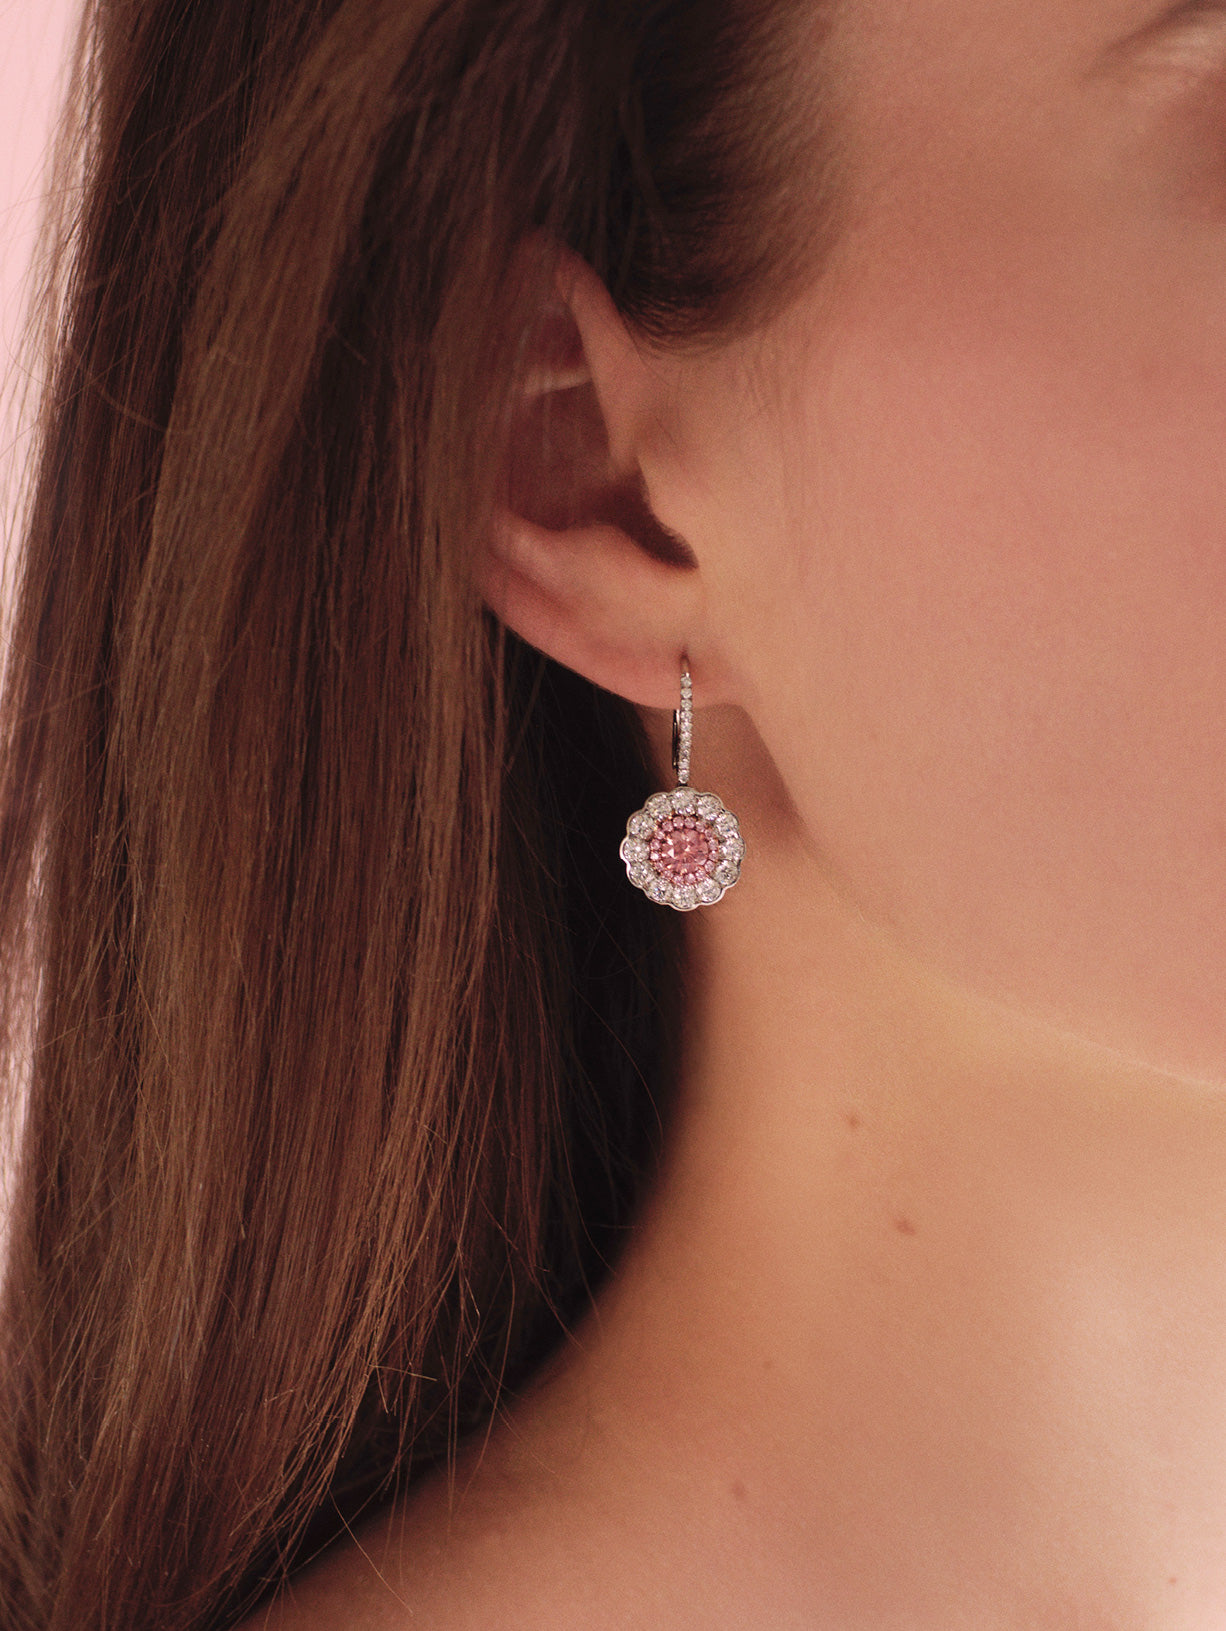 Argyle Pink™ Diamond Scalloped Earrings - Pink Diamonds, J FINE - J Fine, Earrings - Pink Diamond Jewelry, argyle-pink™-diamond-scalloped-earrings-by-j-fine - Argyle Pink Diamonds